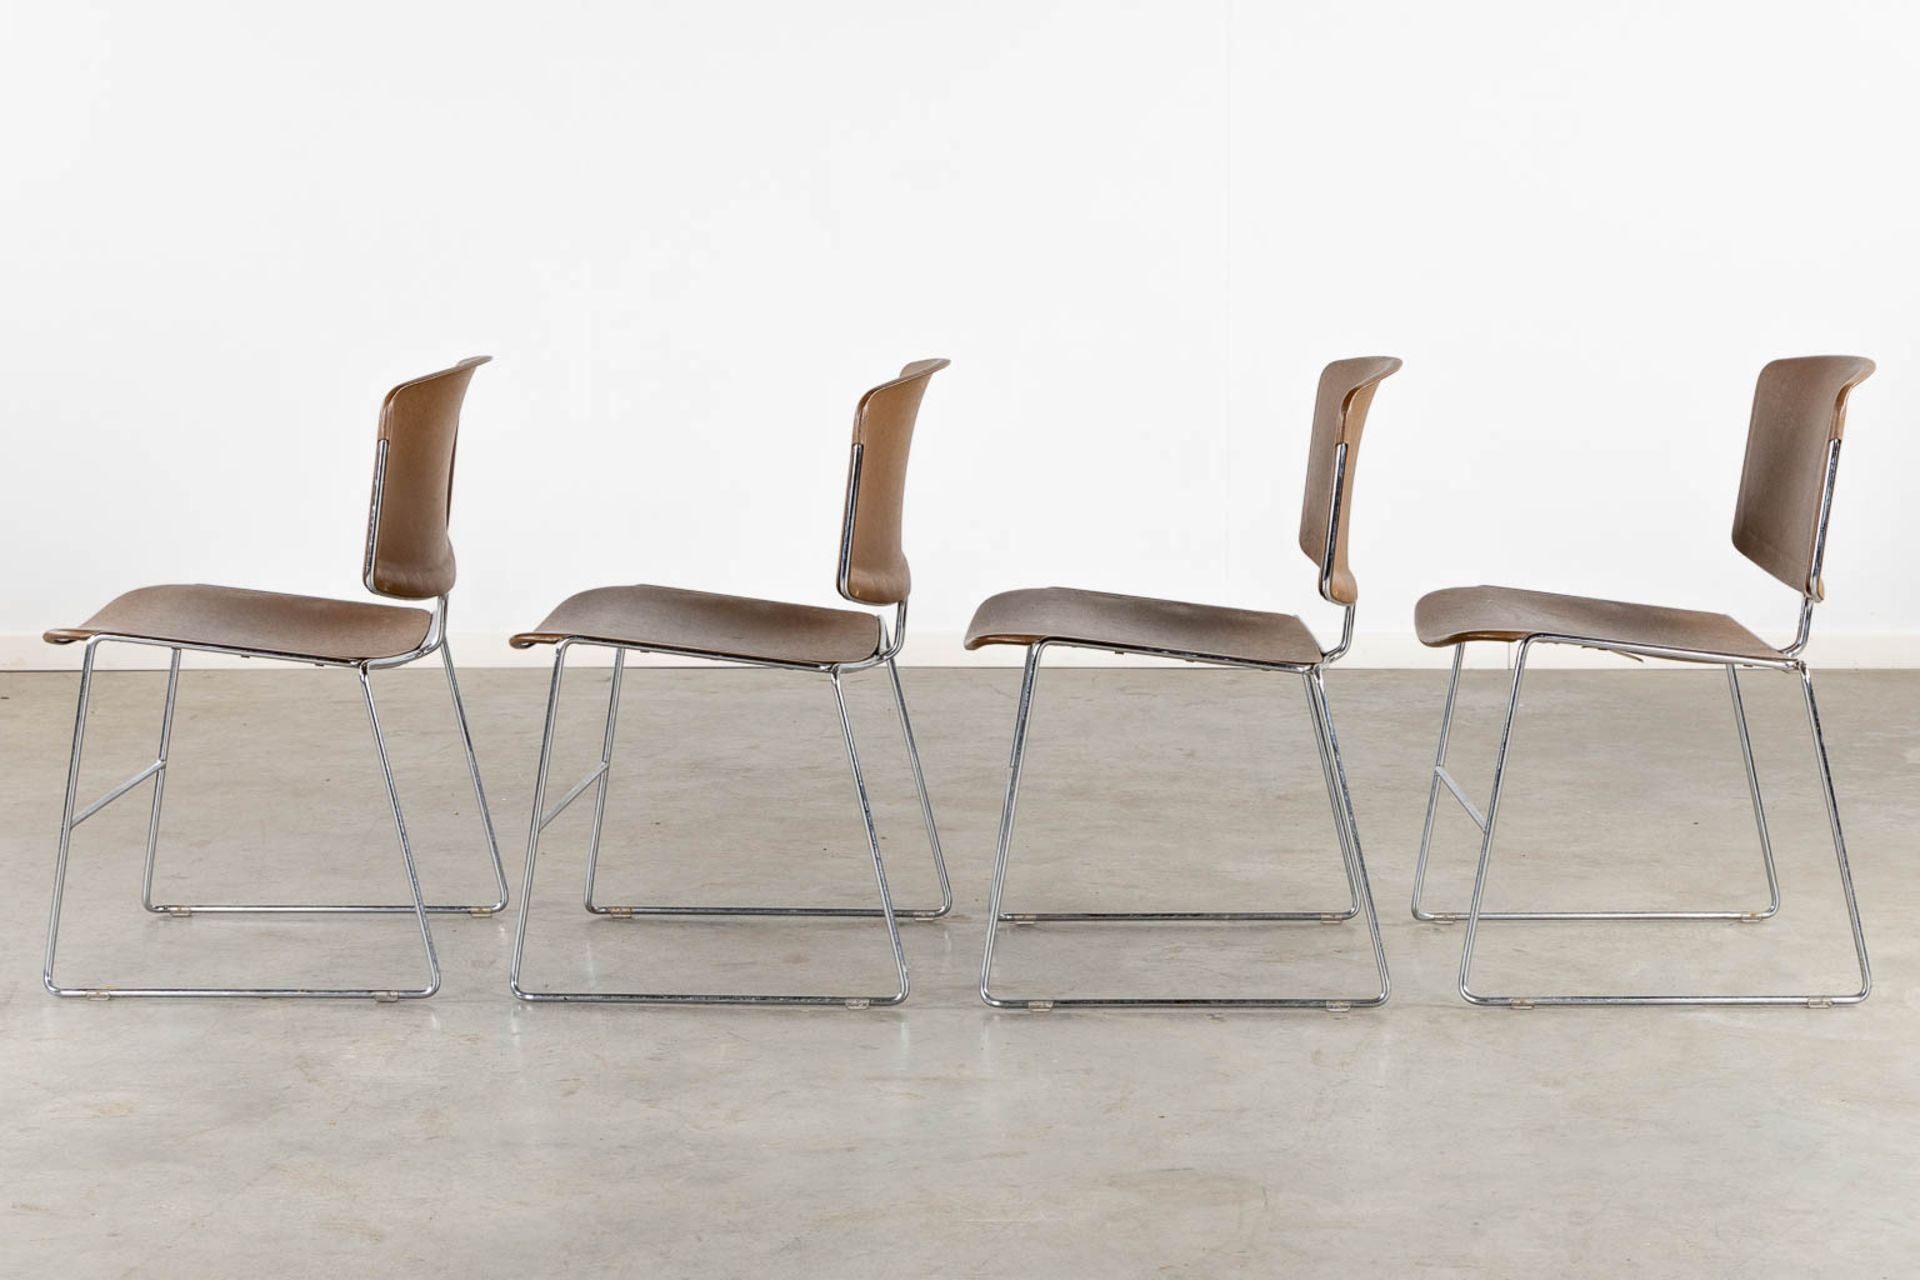 A set of 4 mid-century chairs 'Steelcase Max Stacker' chairs. (L:52 x W:50 x H:78 cm) - Bild 4 aus 14